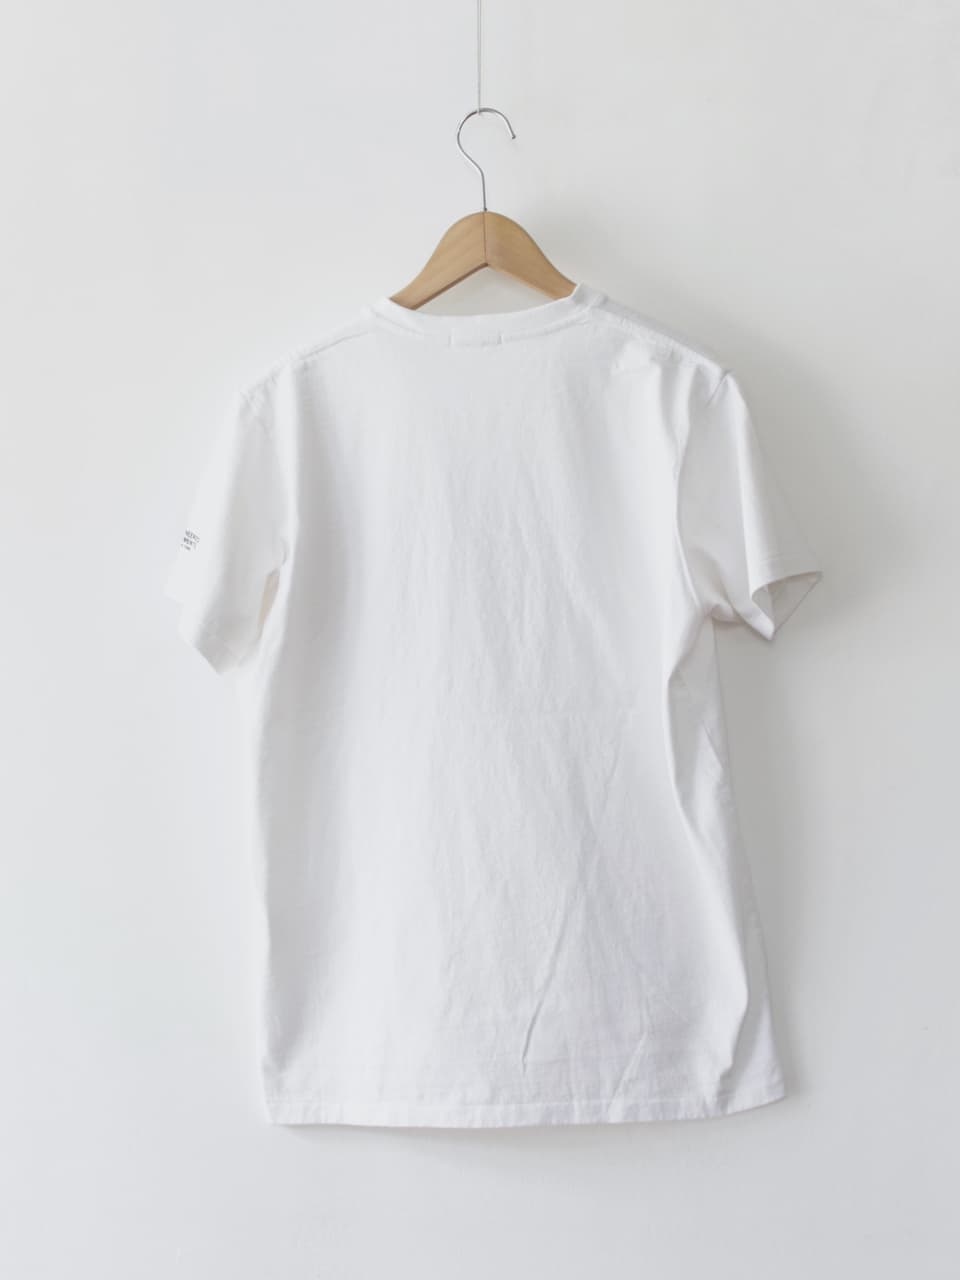 Printed Cross Crewneck T-Shirt - Bau White 3